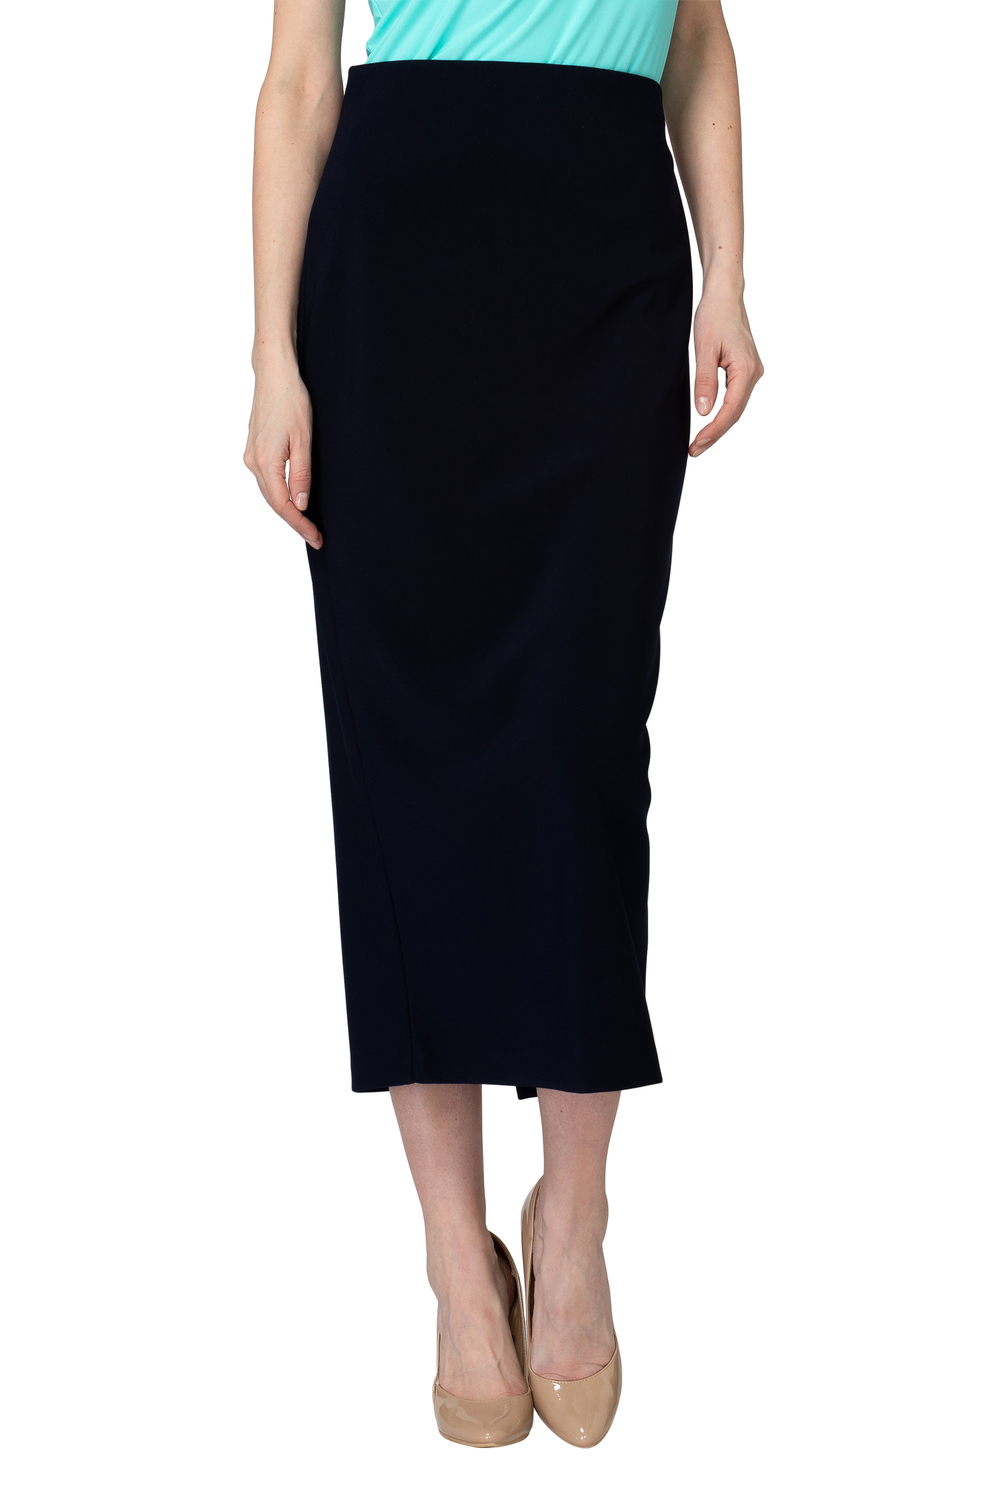 Joseph Ribkoff skirt style 193092. Midnight Blue 40